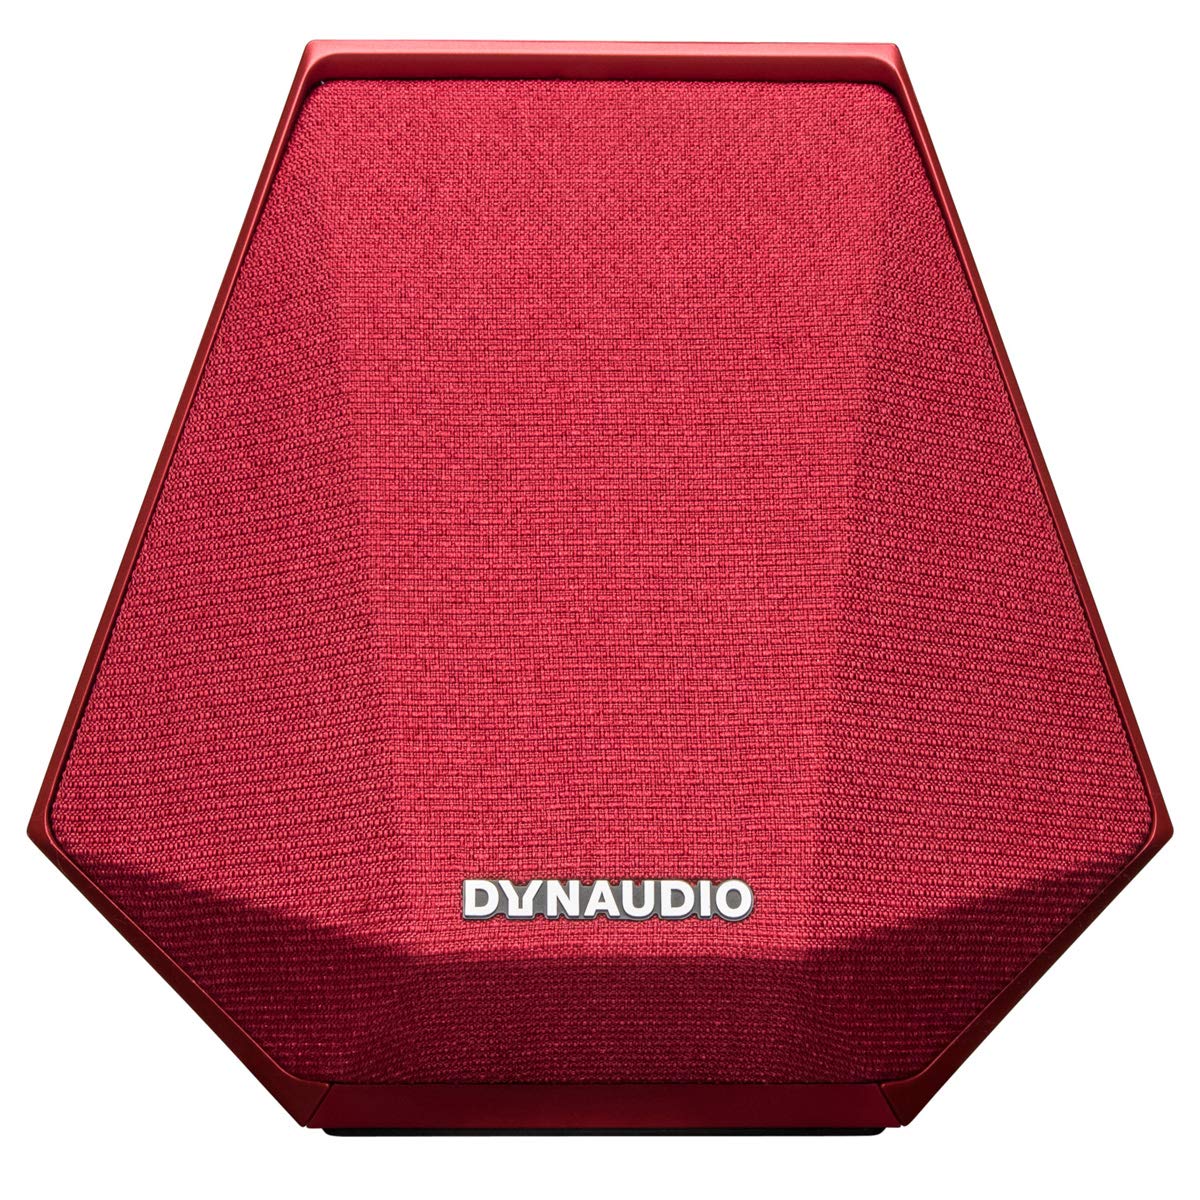 Dynaudio Music 1 - Đỏ